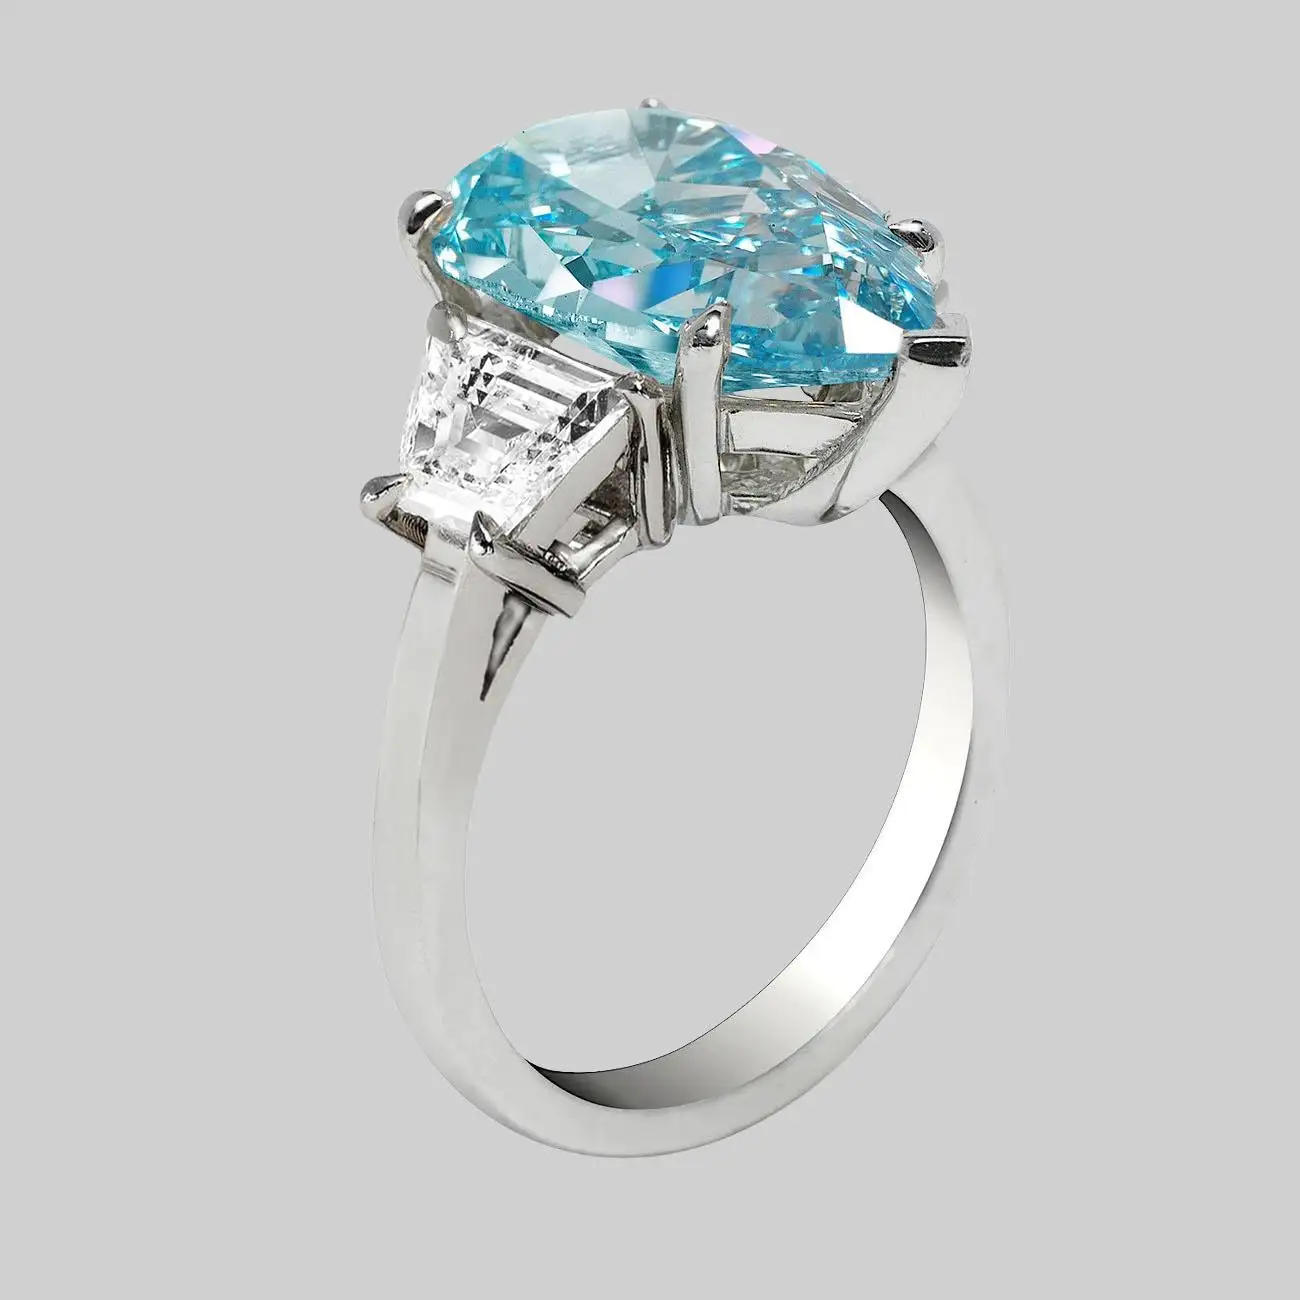 3-Carat-Fancy-Green-Blue-Pear-Cut-Diamond-Ring-RARE-GIA-Certified-3.webp